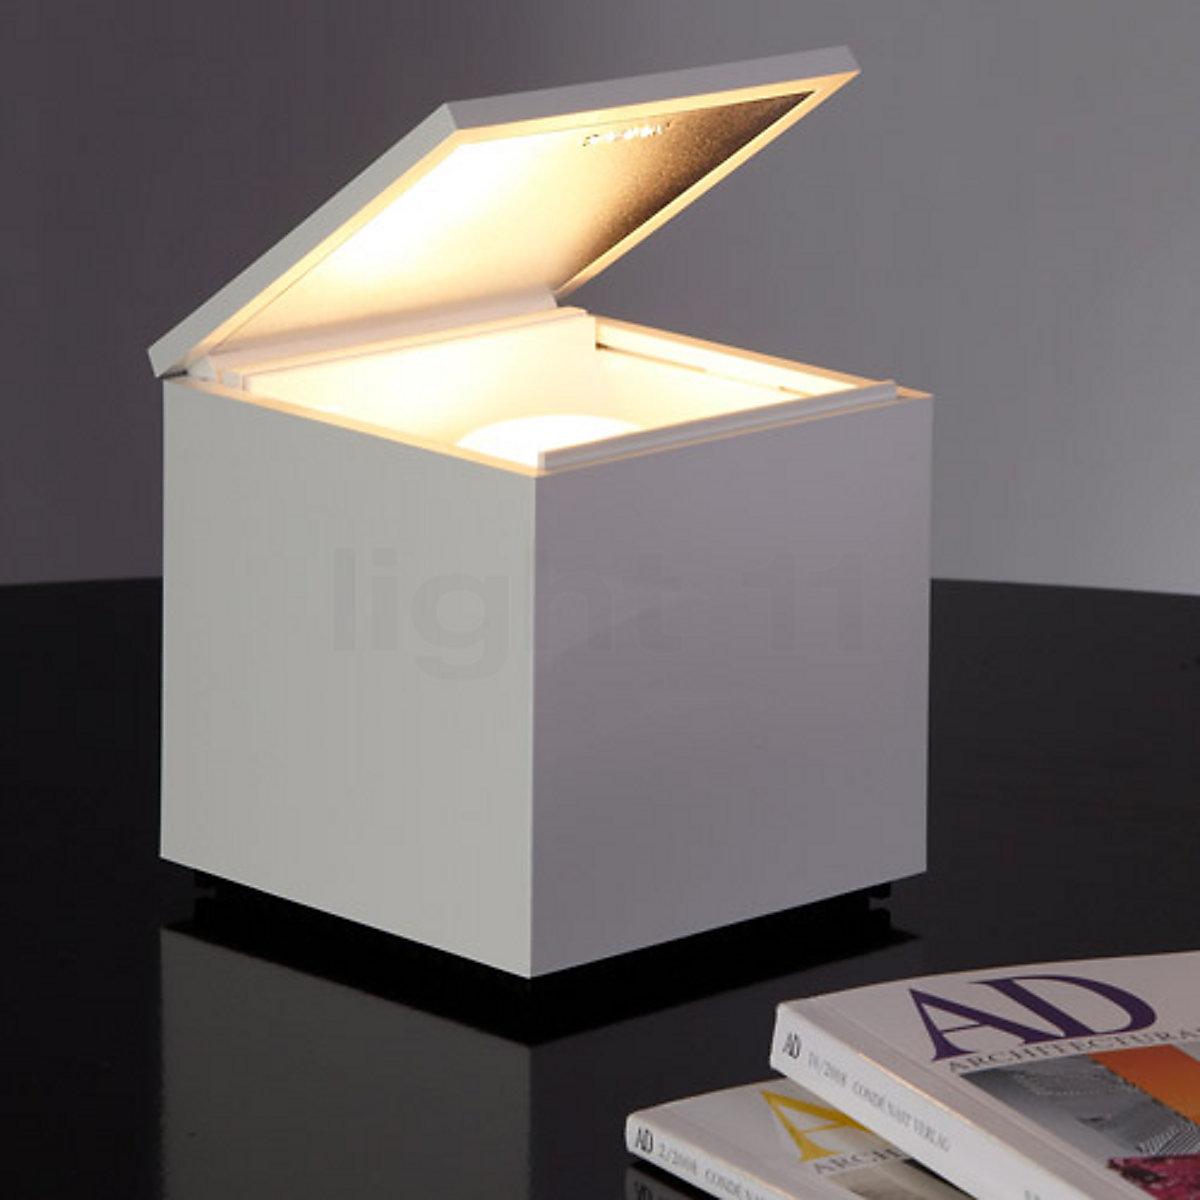 Buy Cini&Nils Cuboluce Bedside table lamp at light11.eu